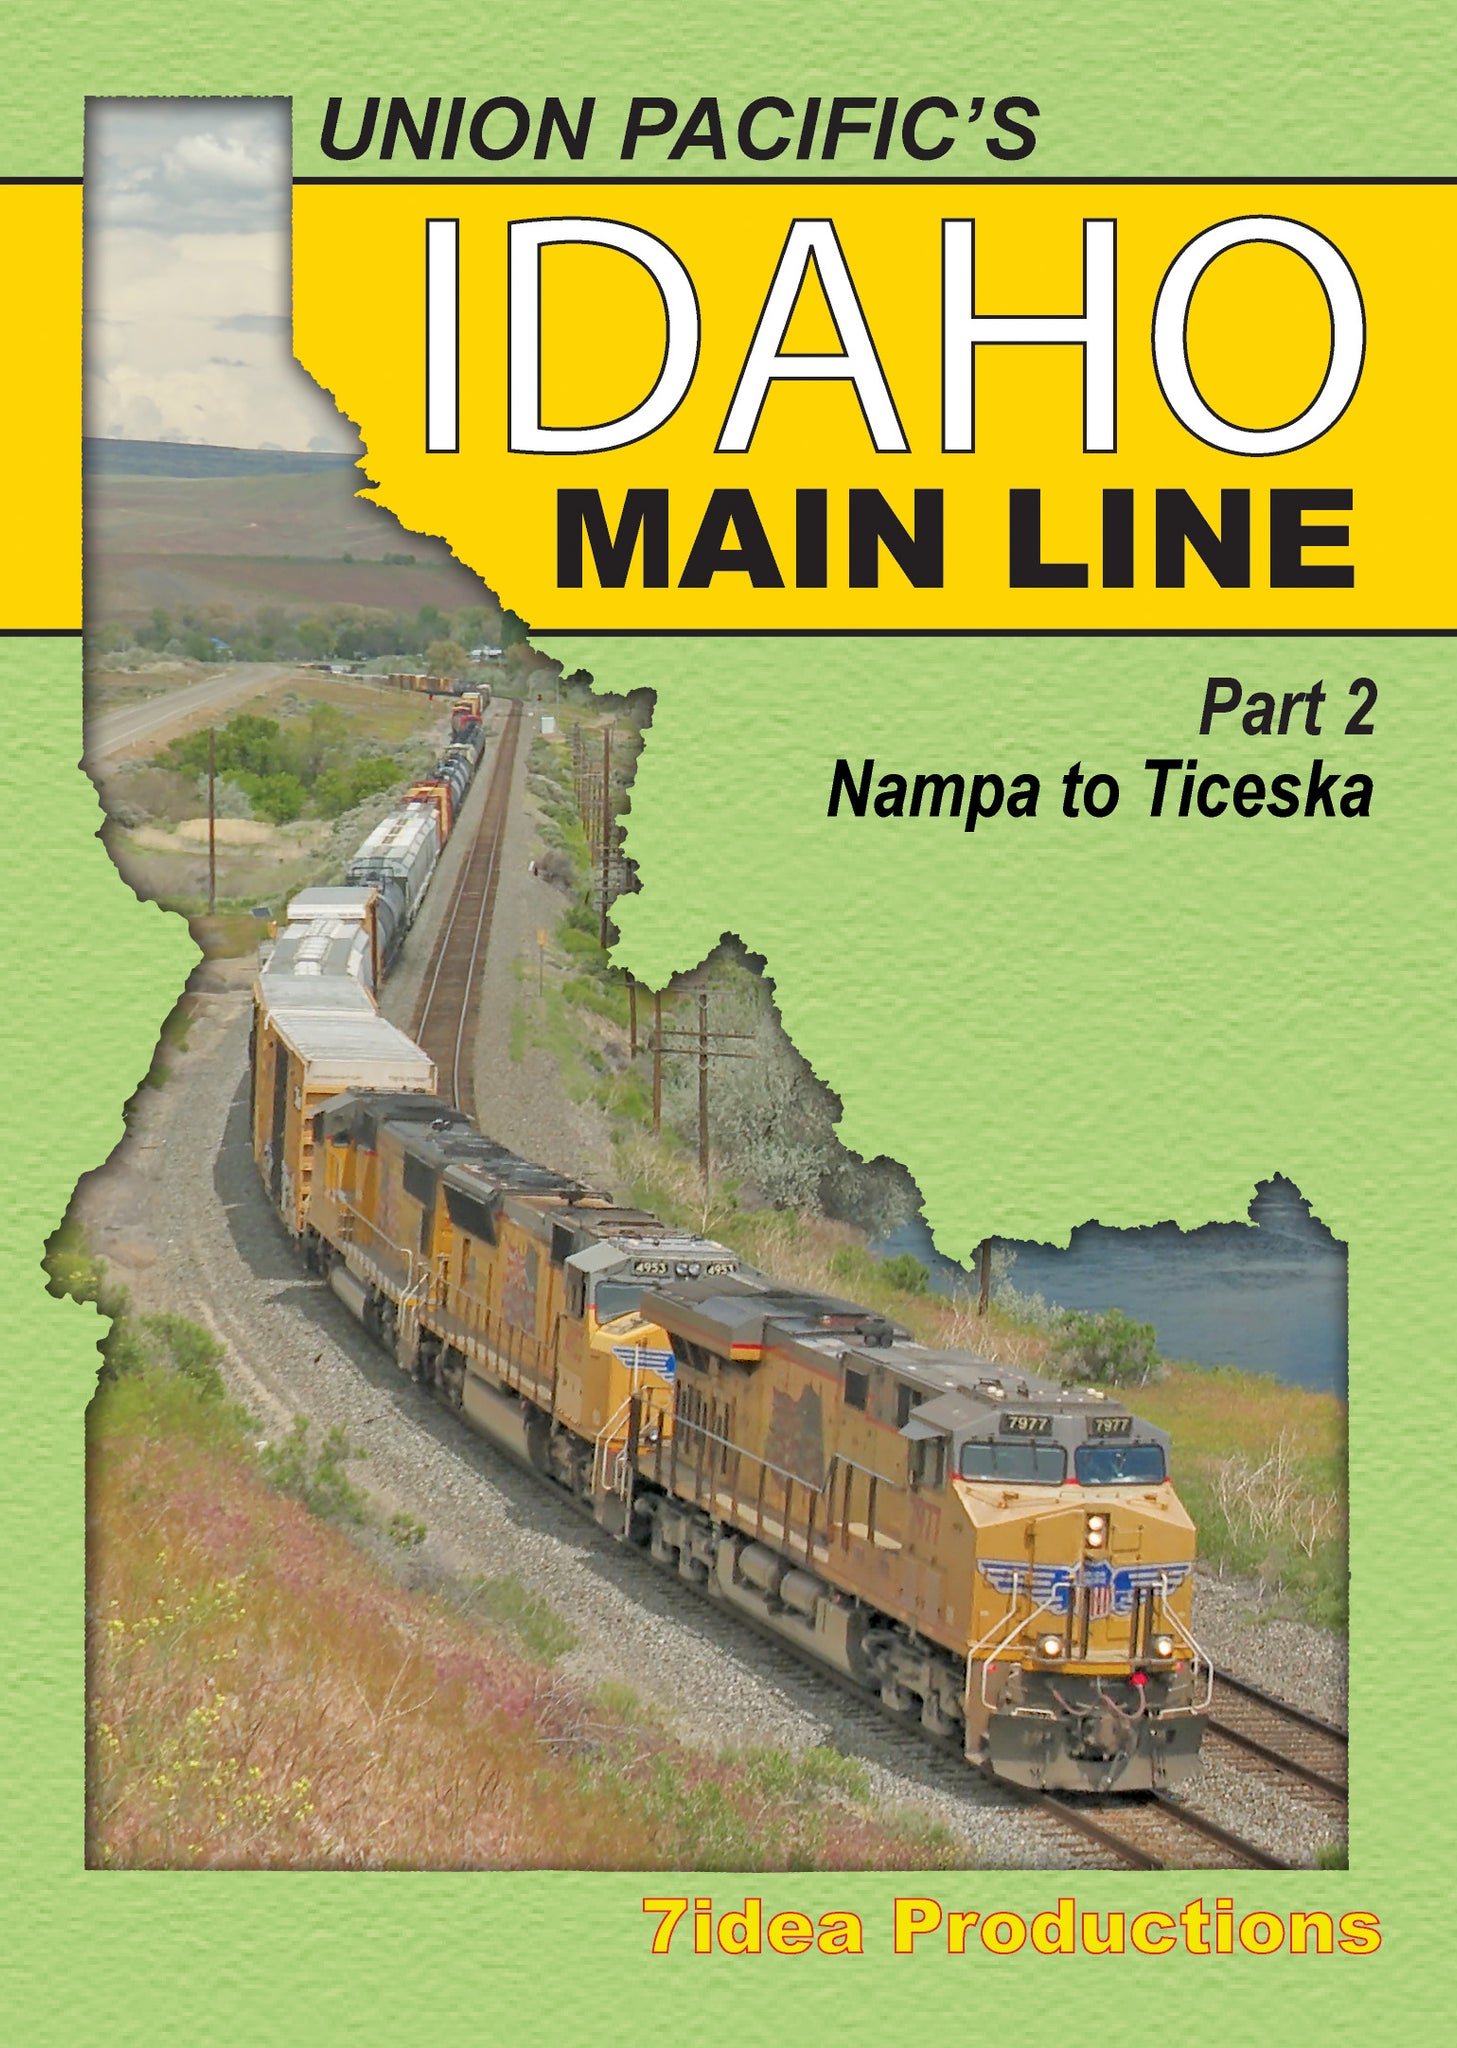 7 idea Union Pacific's Idaho Main Line Part 2